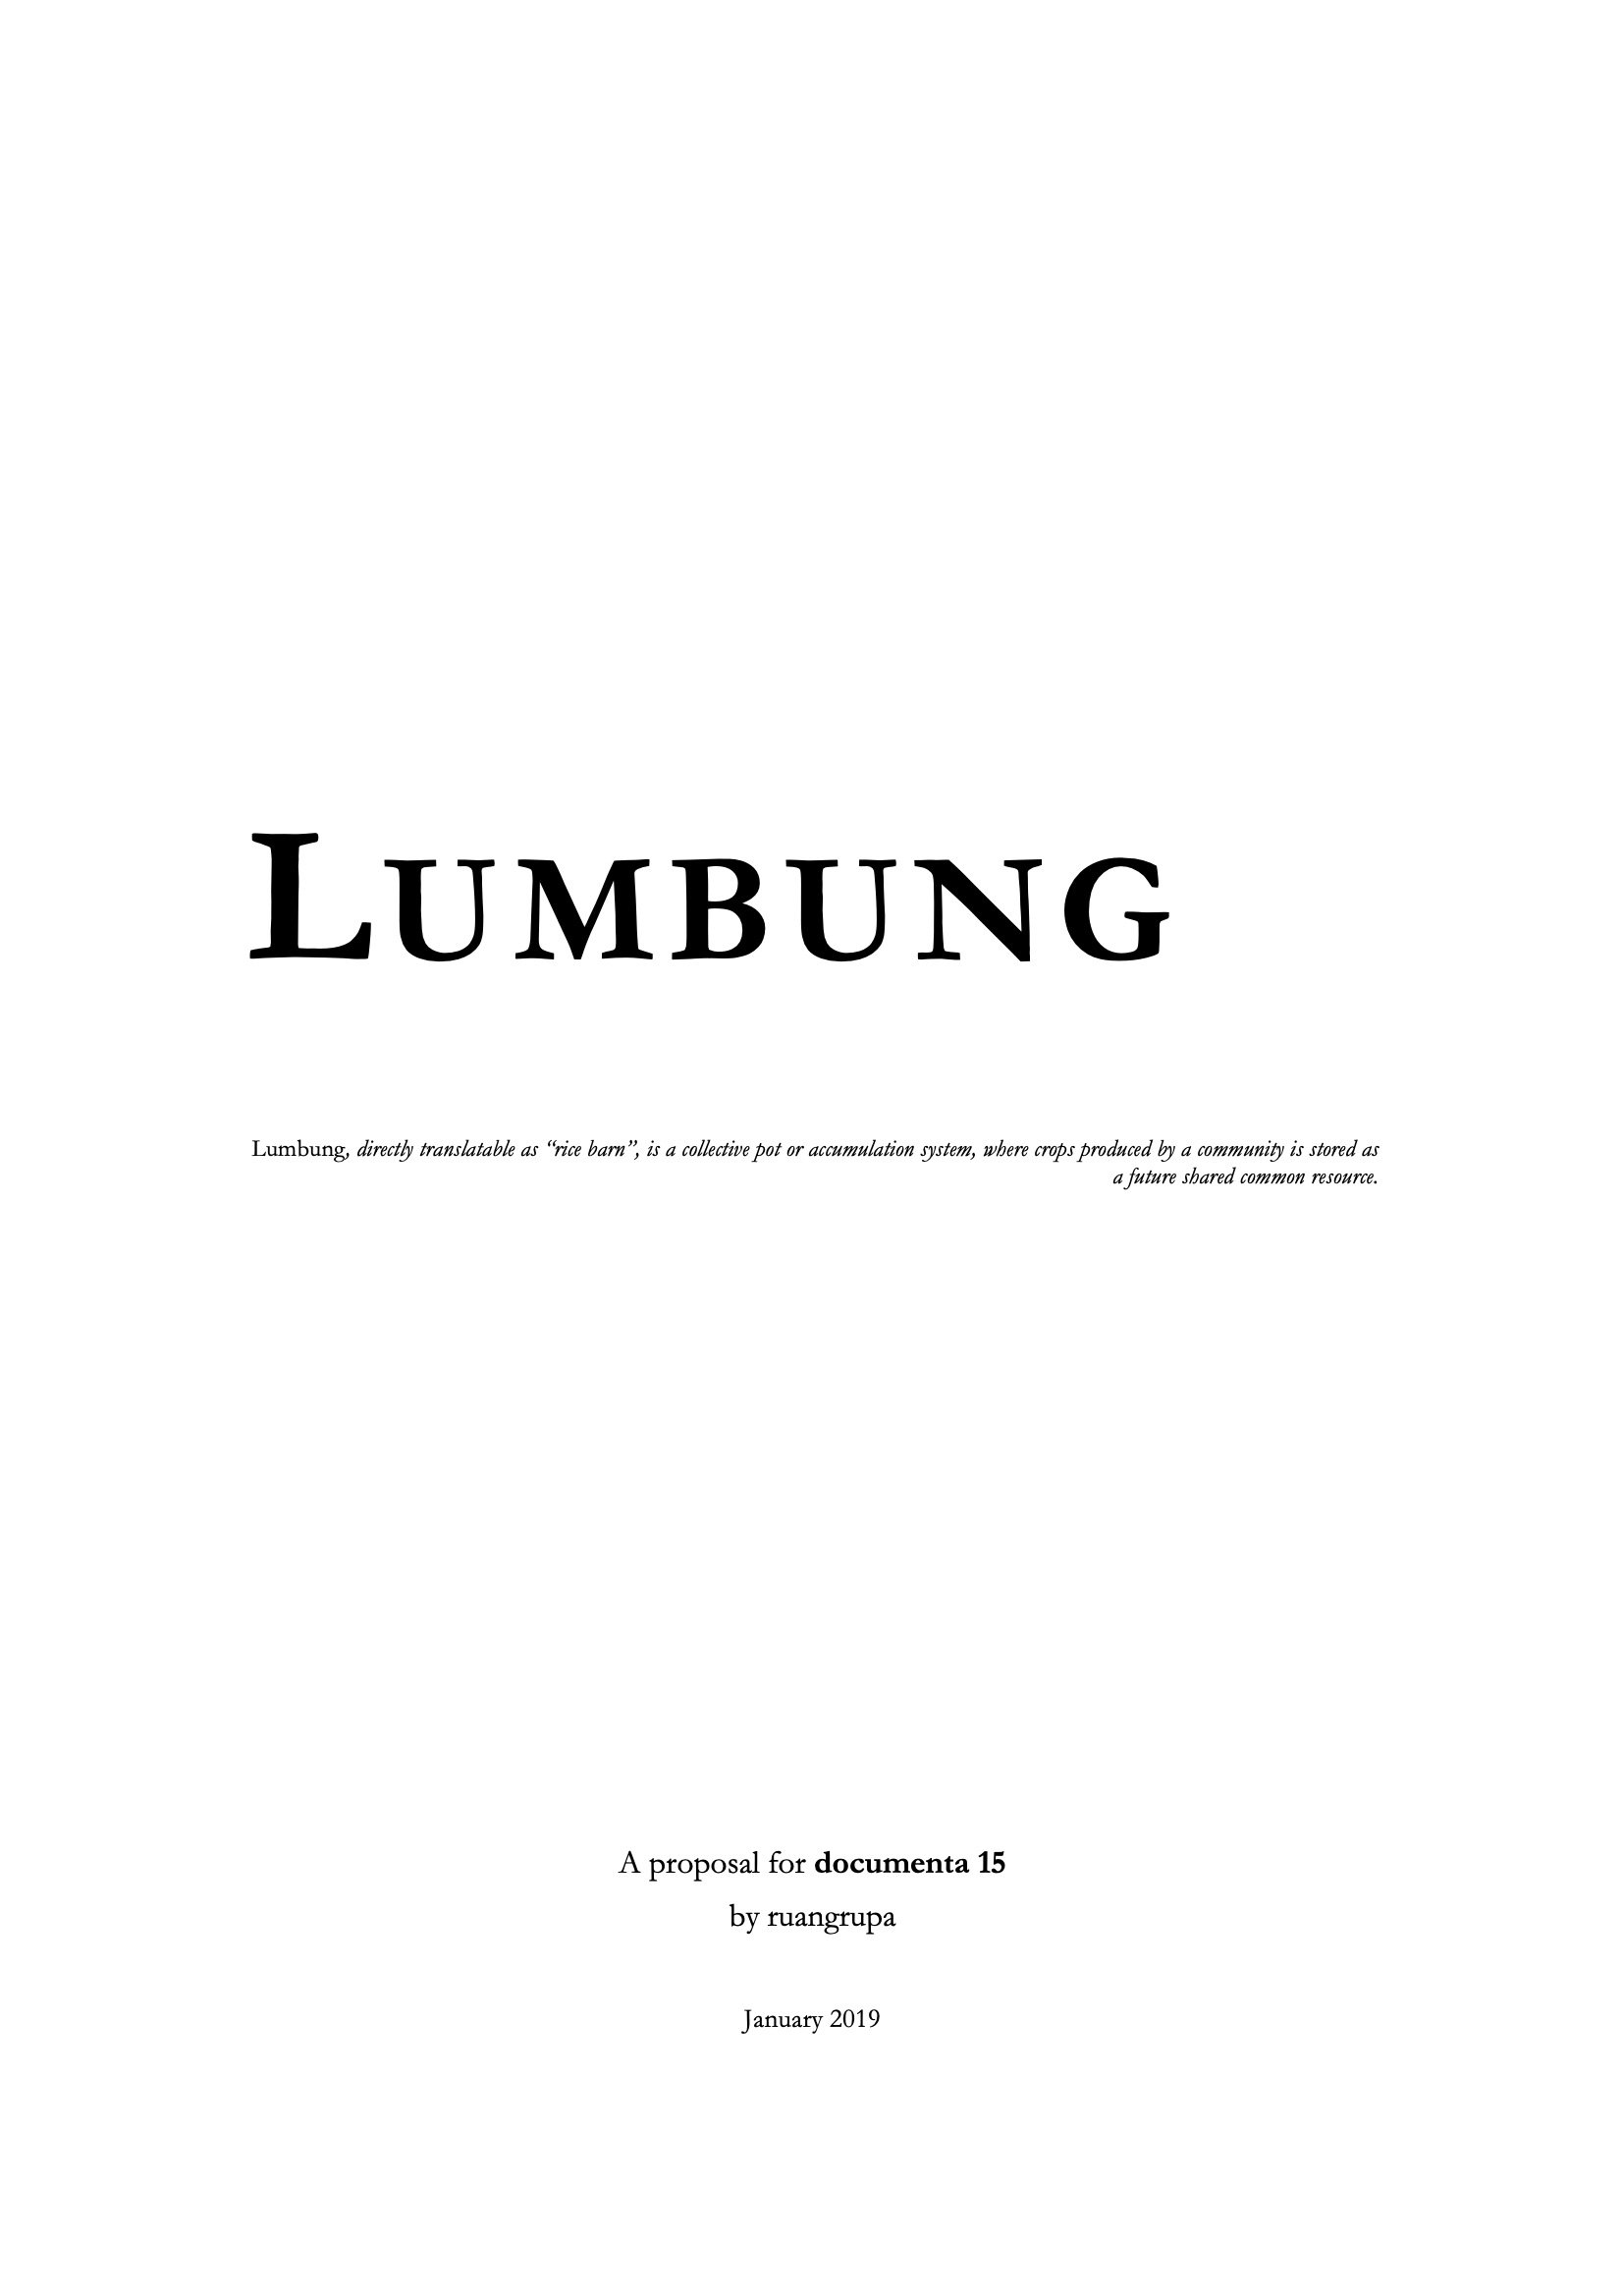 LUMBUNG a proposal for documenta 15 by ruangrupa 01.jpg